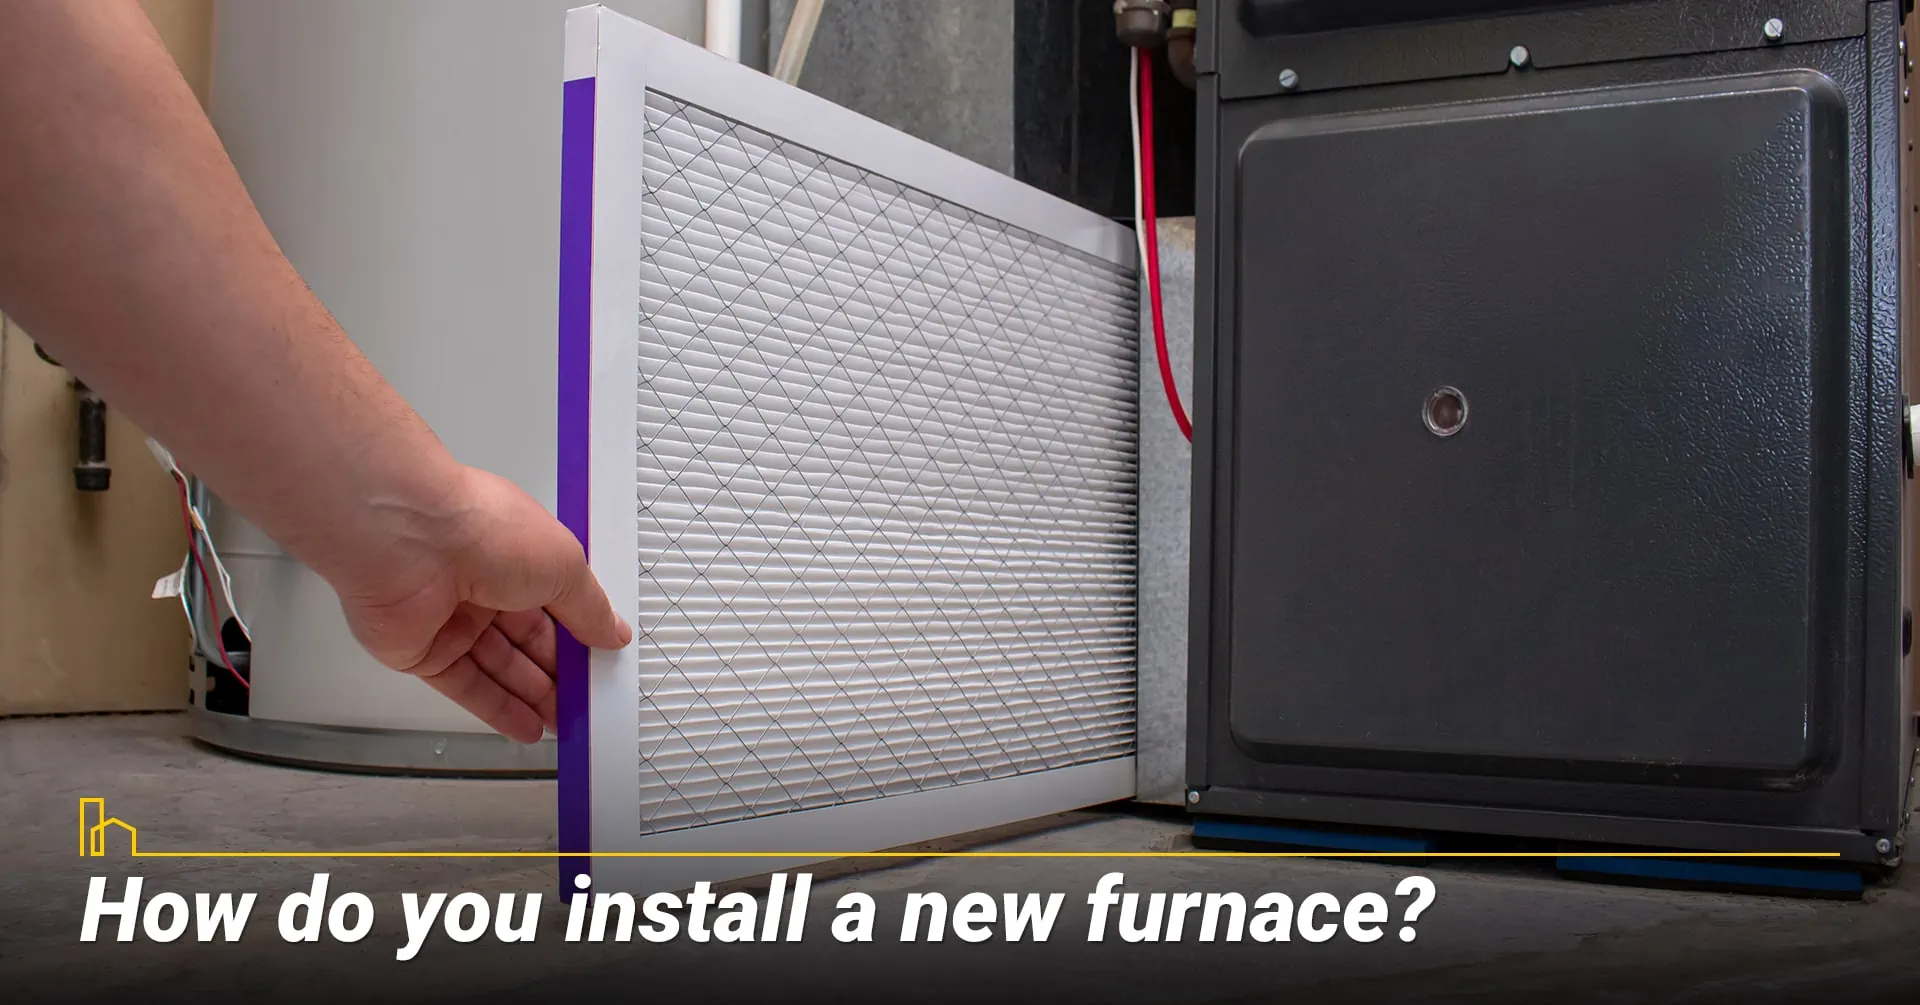 6. How do you install a new furnace?